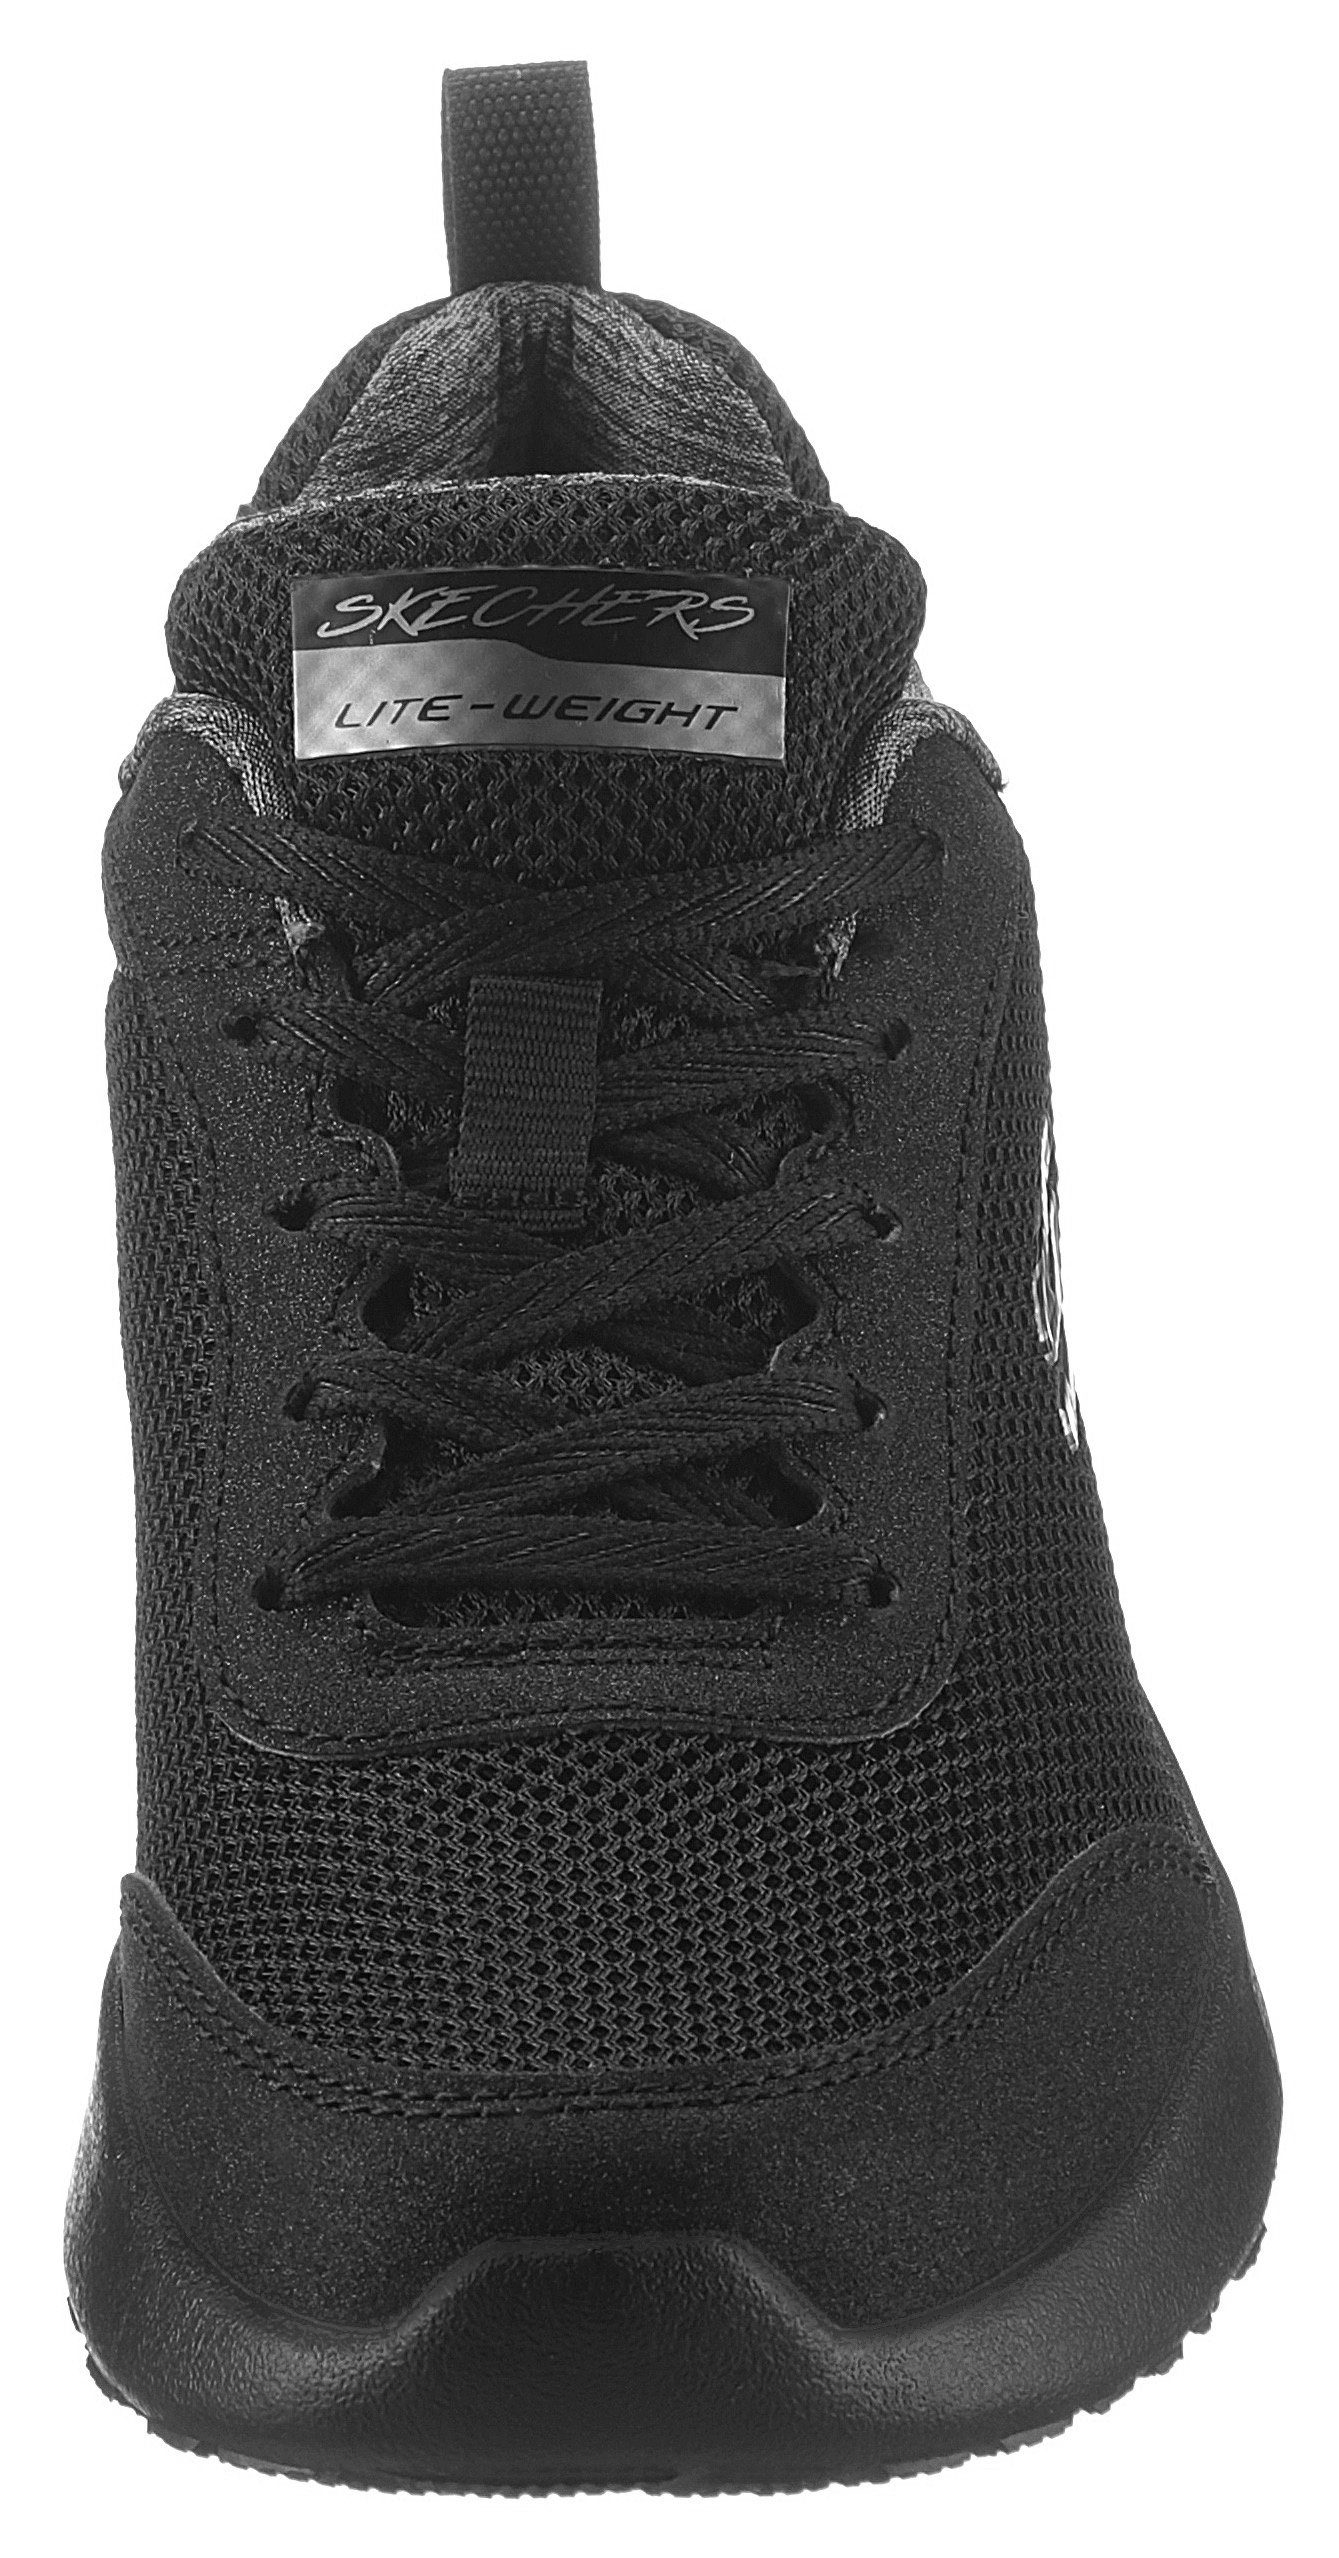 an black Sneaker Metallic-Element Brake Skechers mit der - Dynamight Ferse Skech-Air Fast